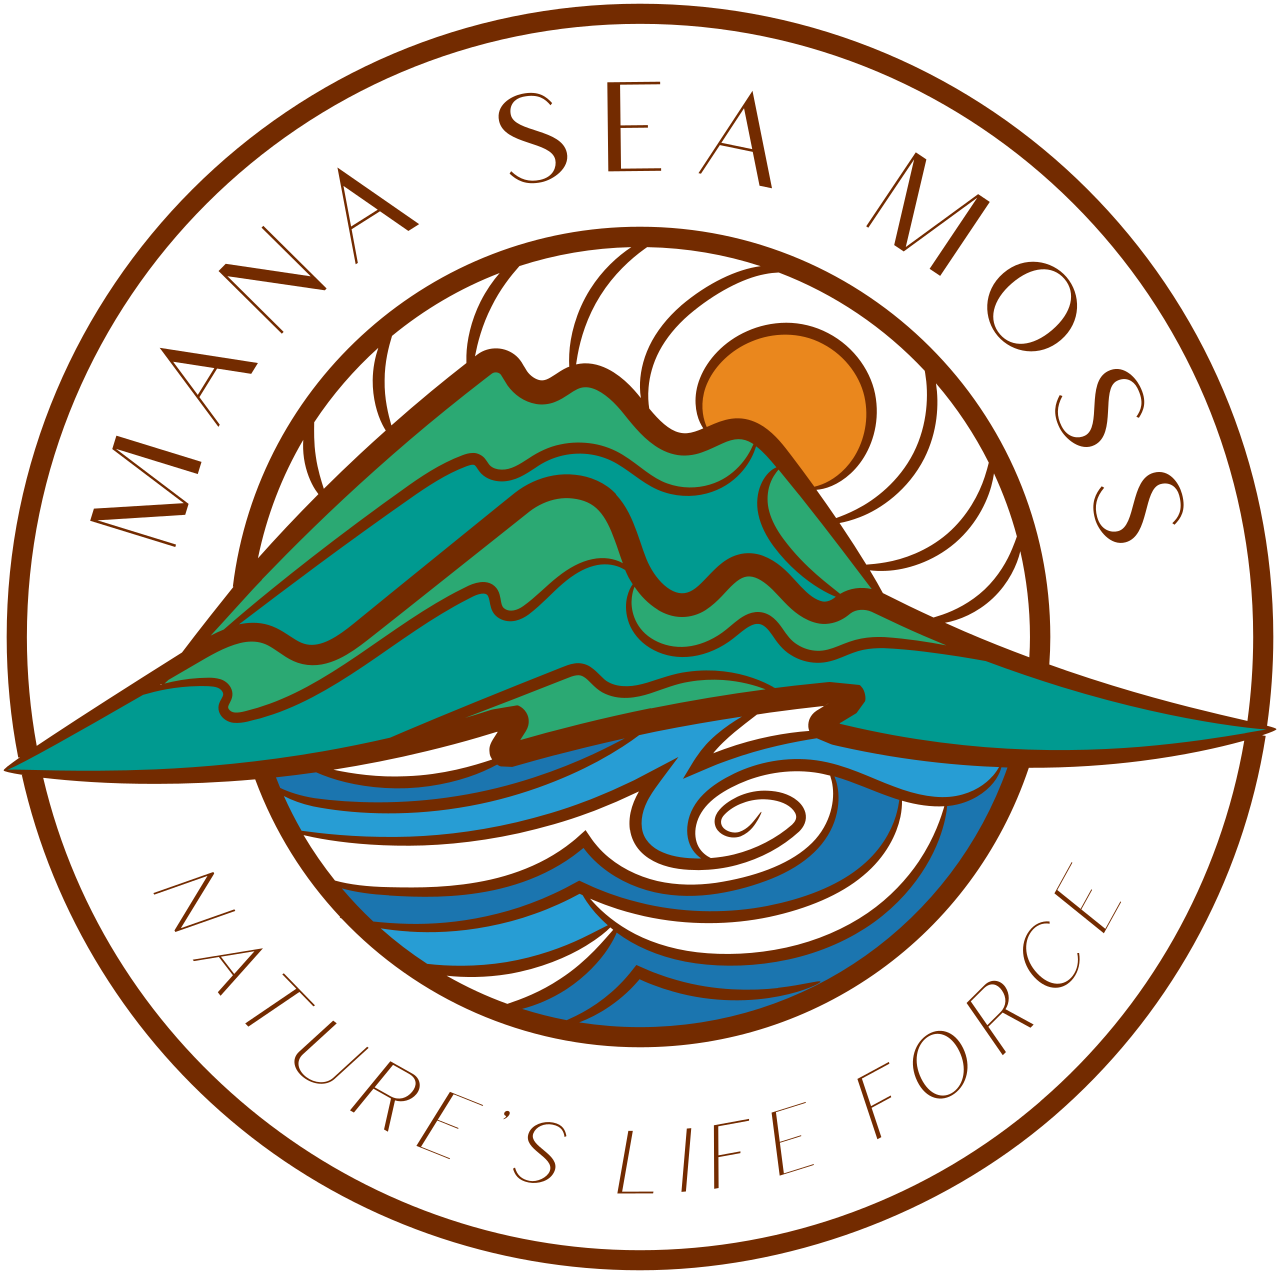 MANA SEA MOSS's logo